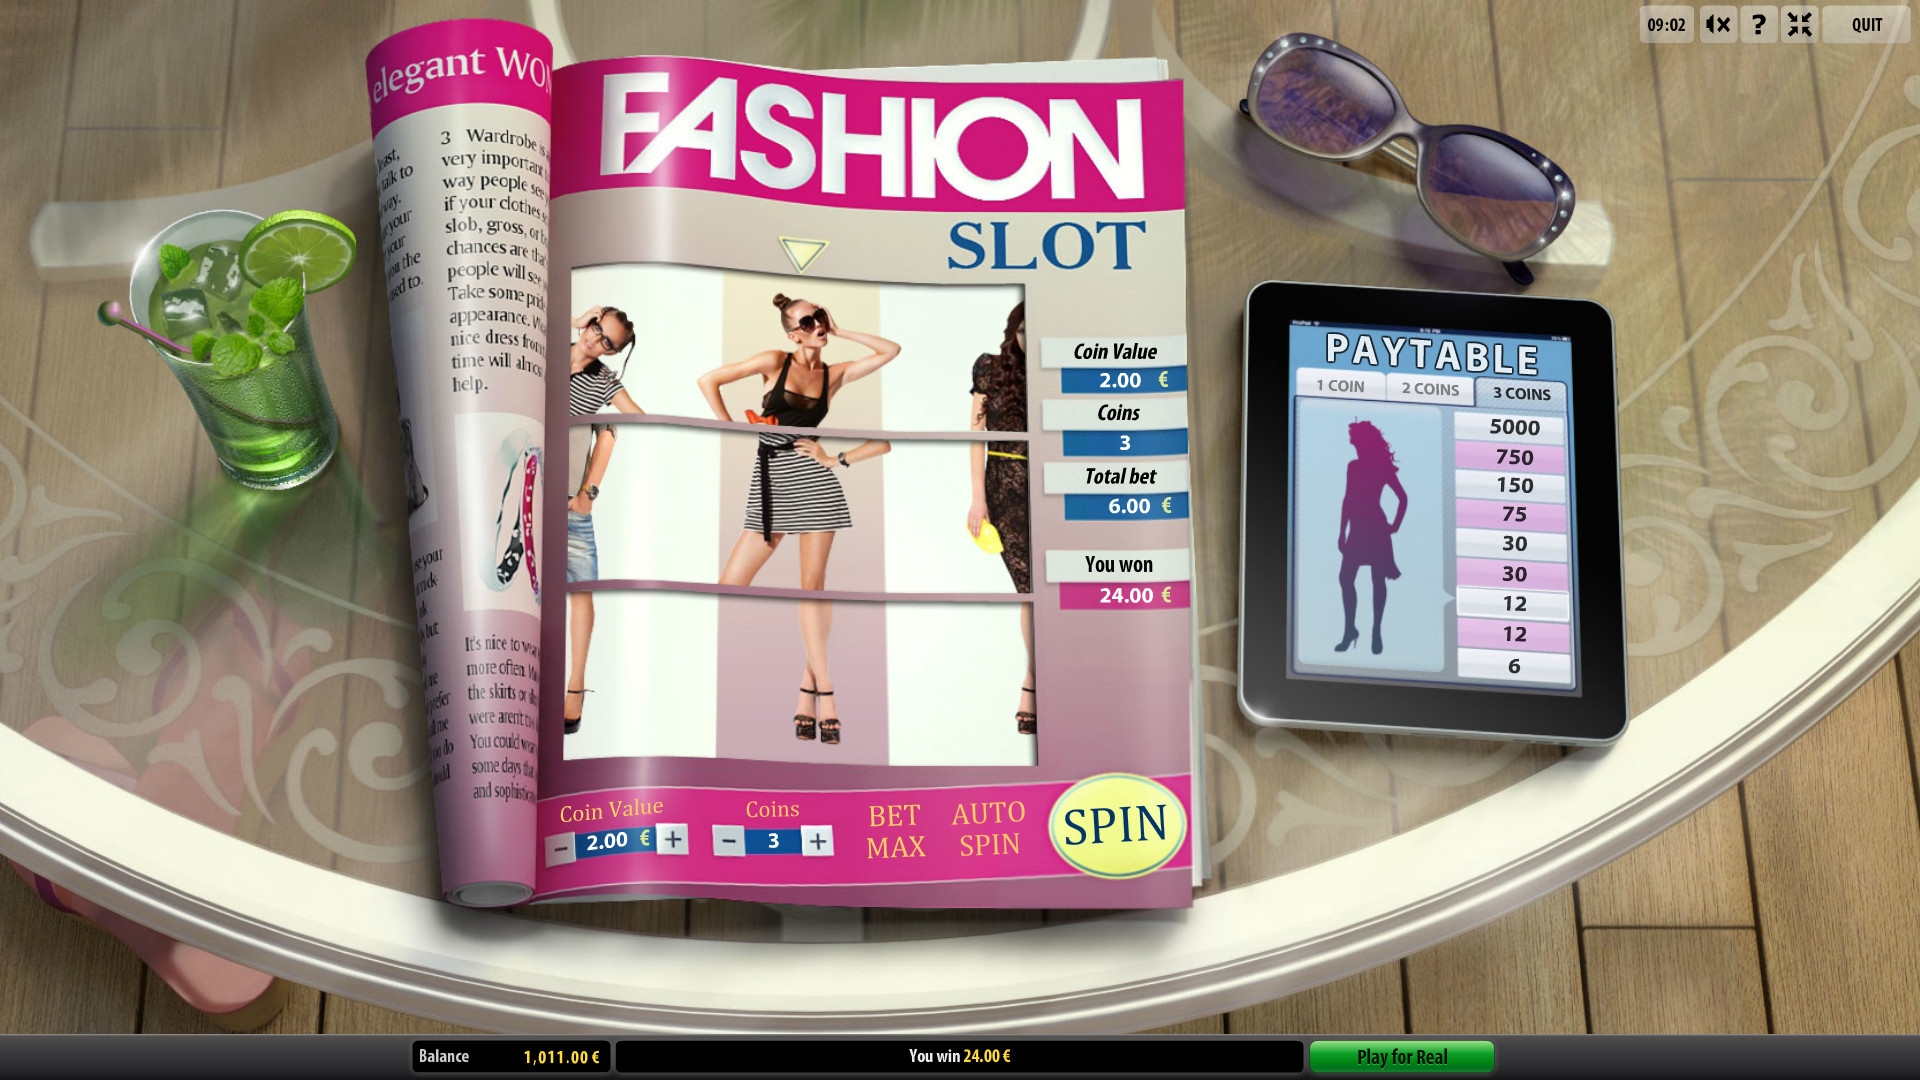 Fashion Slot (Fashion Slot) from category Slots